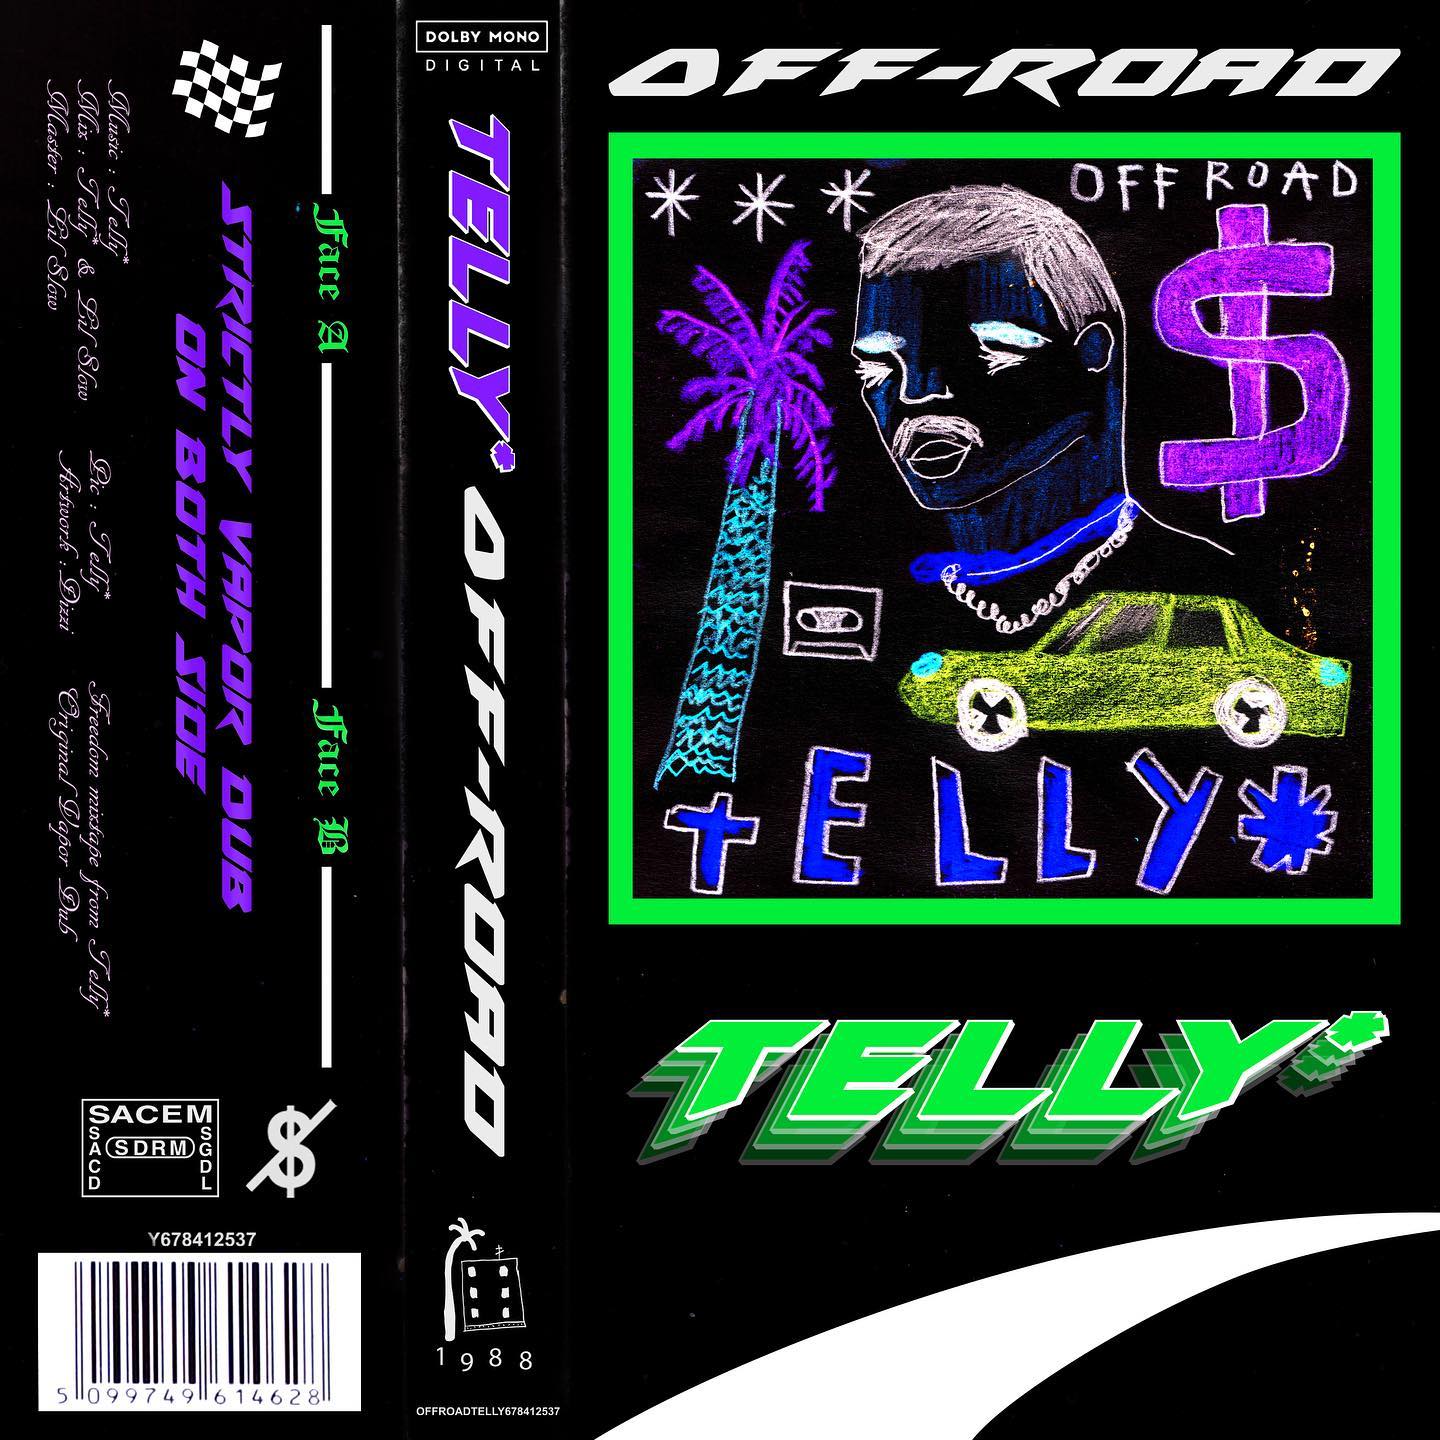 Telly* - Off Road !!!! 🌋🌋🌋
Brand New Mixtape from @tellyofficiel @bigaranx.telly 

We Are Vapor!!! 

#vapordub